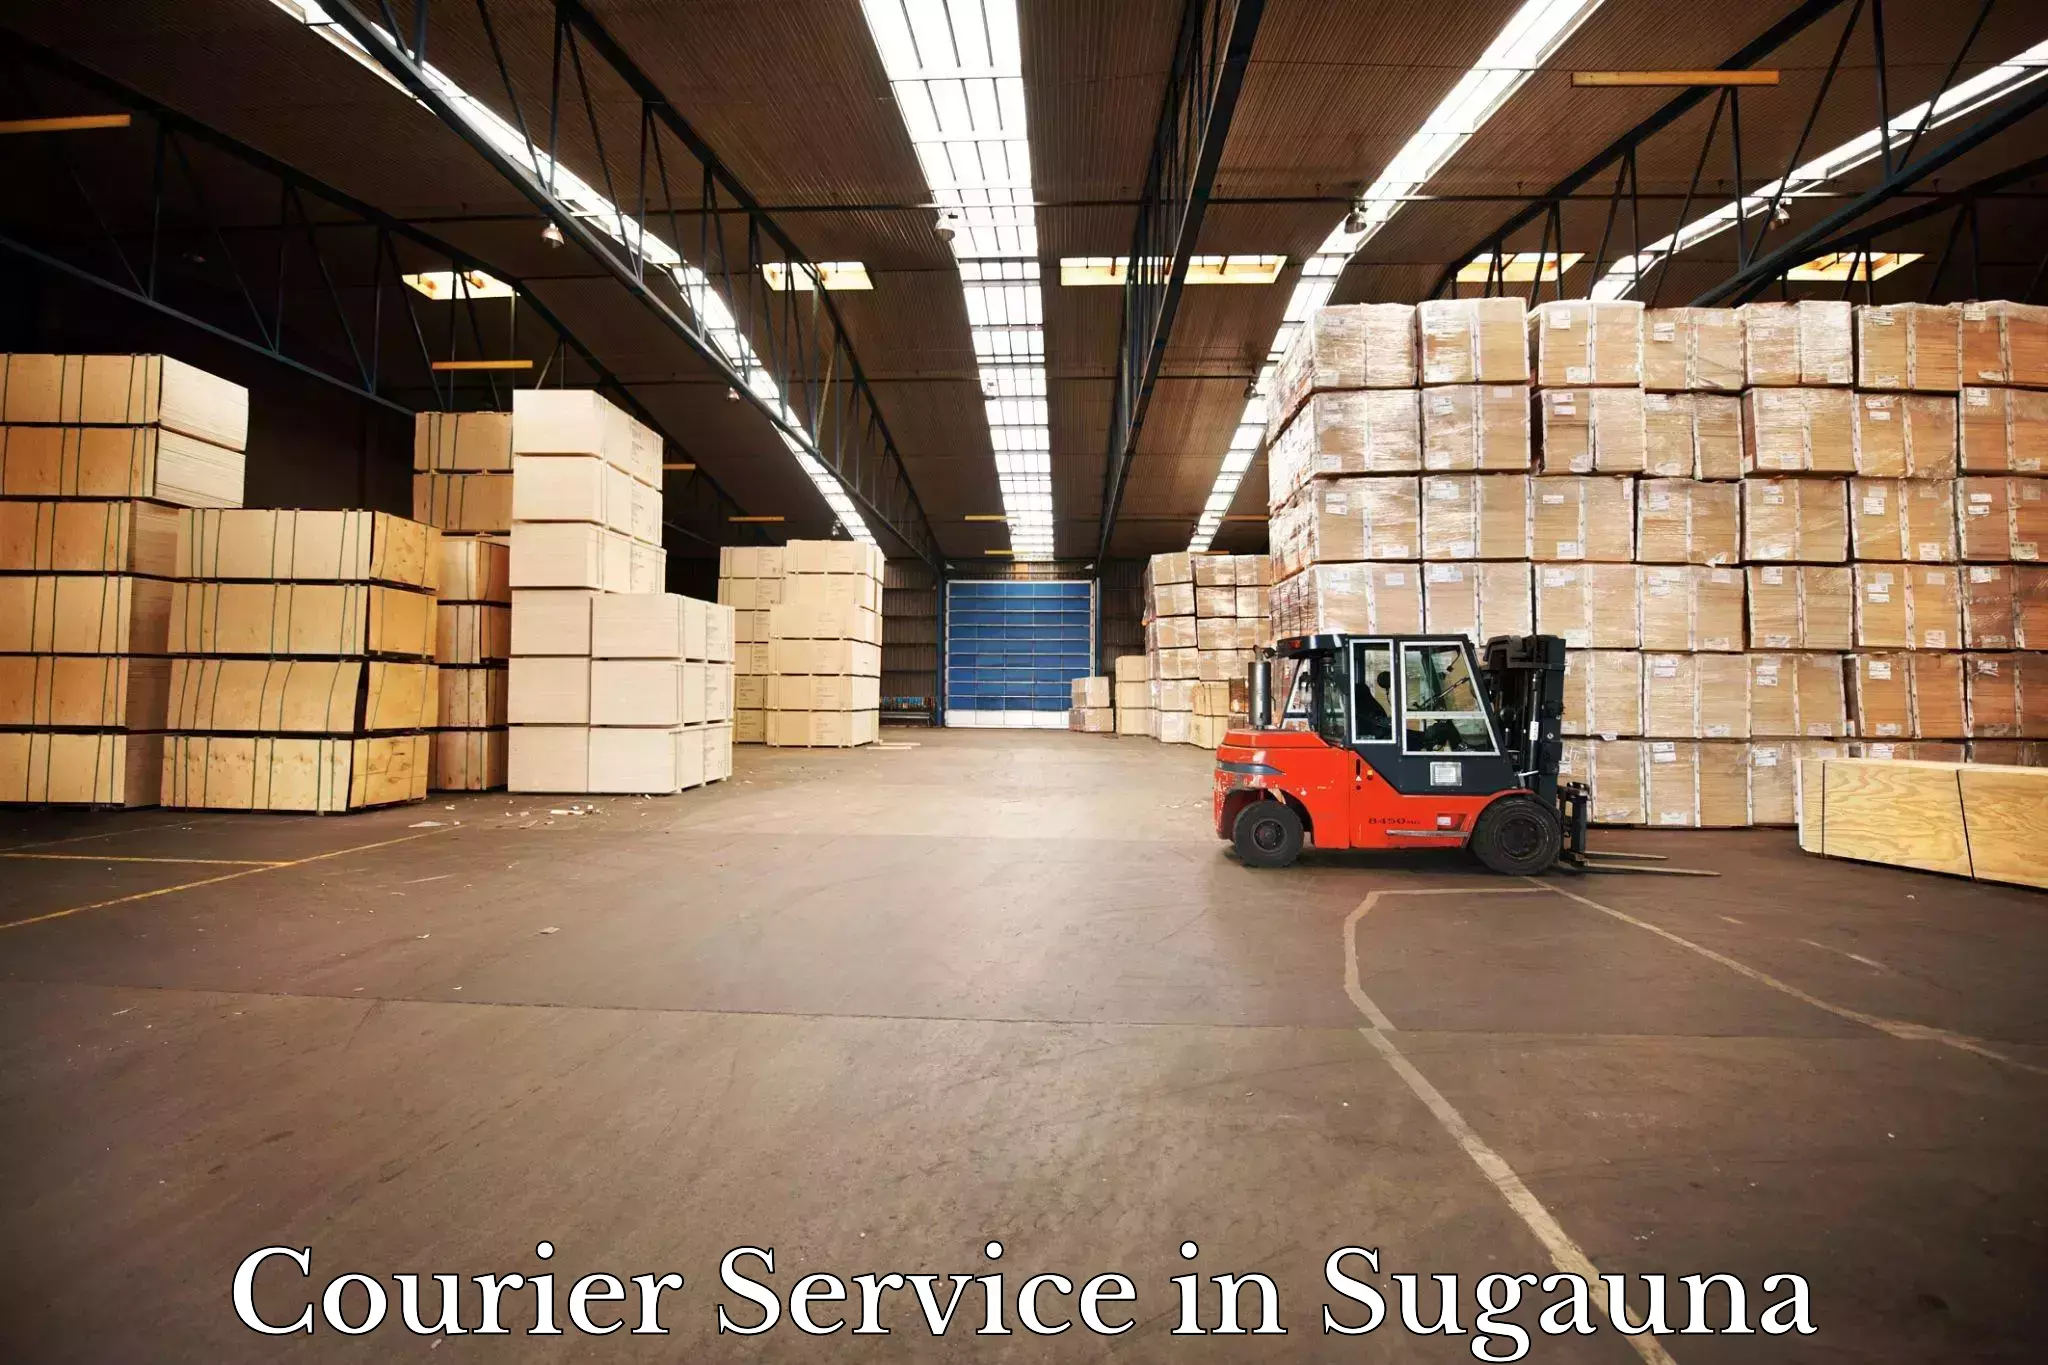 Seamless shipping experience in Sugauna